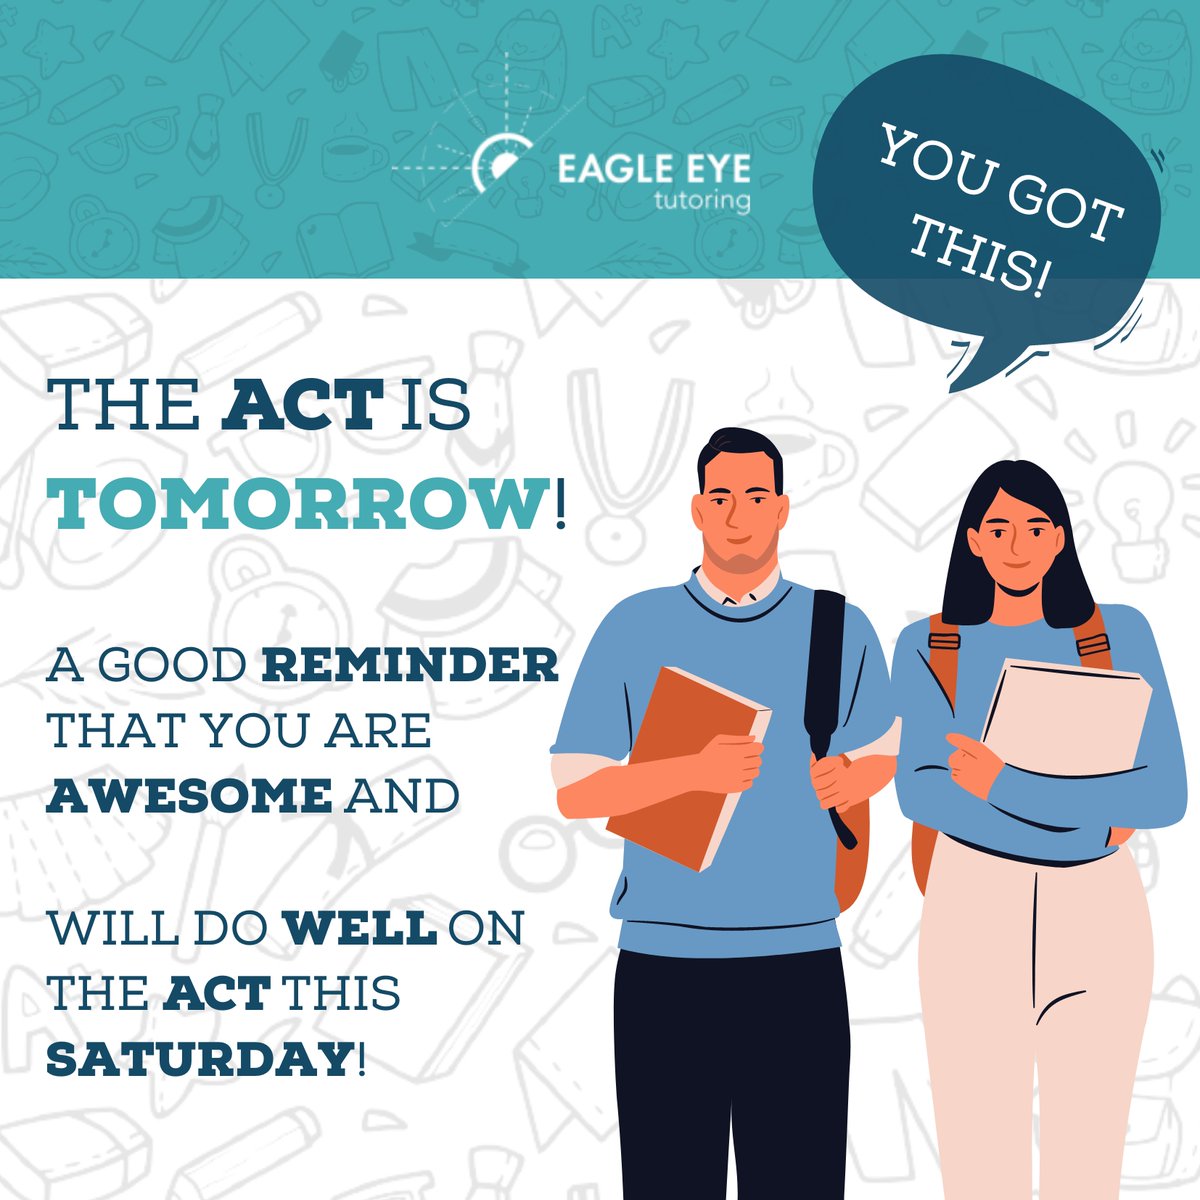 Keep faith in yourself.
You got this!

Good luck with your ACT test tomorrow.
.
.
.
.
.
.
.
.
.
#ACTtest #ACTprep #ACTscore #ACTstudy #ACTtips #ACTexam #ACTstrategy #ACTmath #ACTenglish #ACTscience #ACTreading #ACTwriting #ACTpractice #ACTsuccess #ACTgoals #ACTimprovement